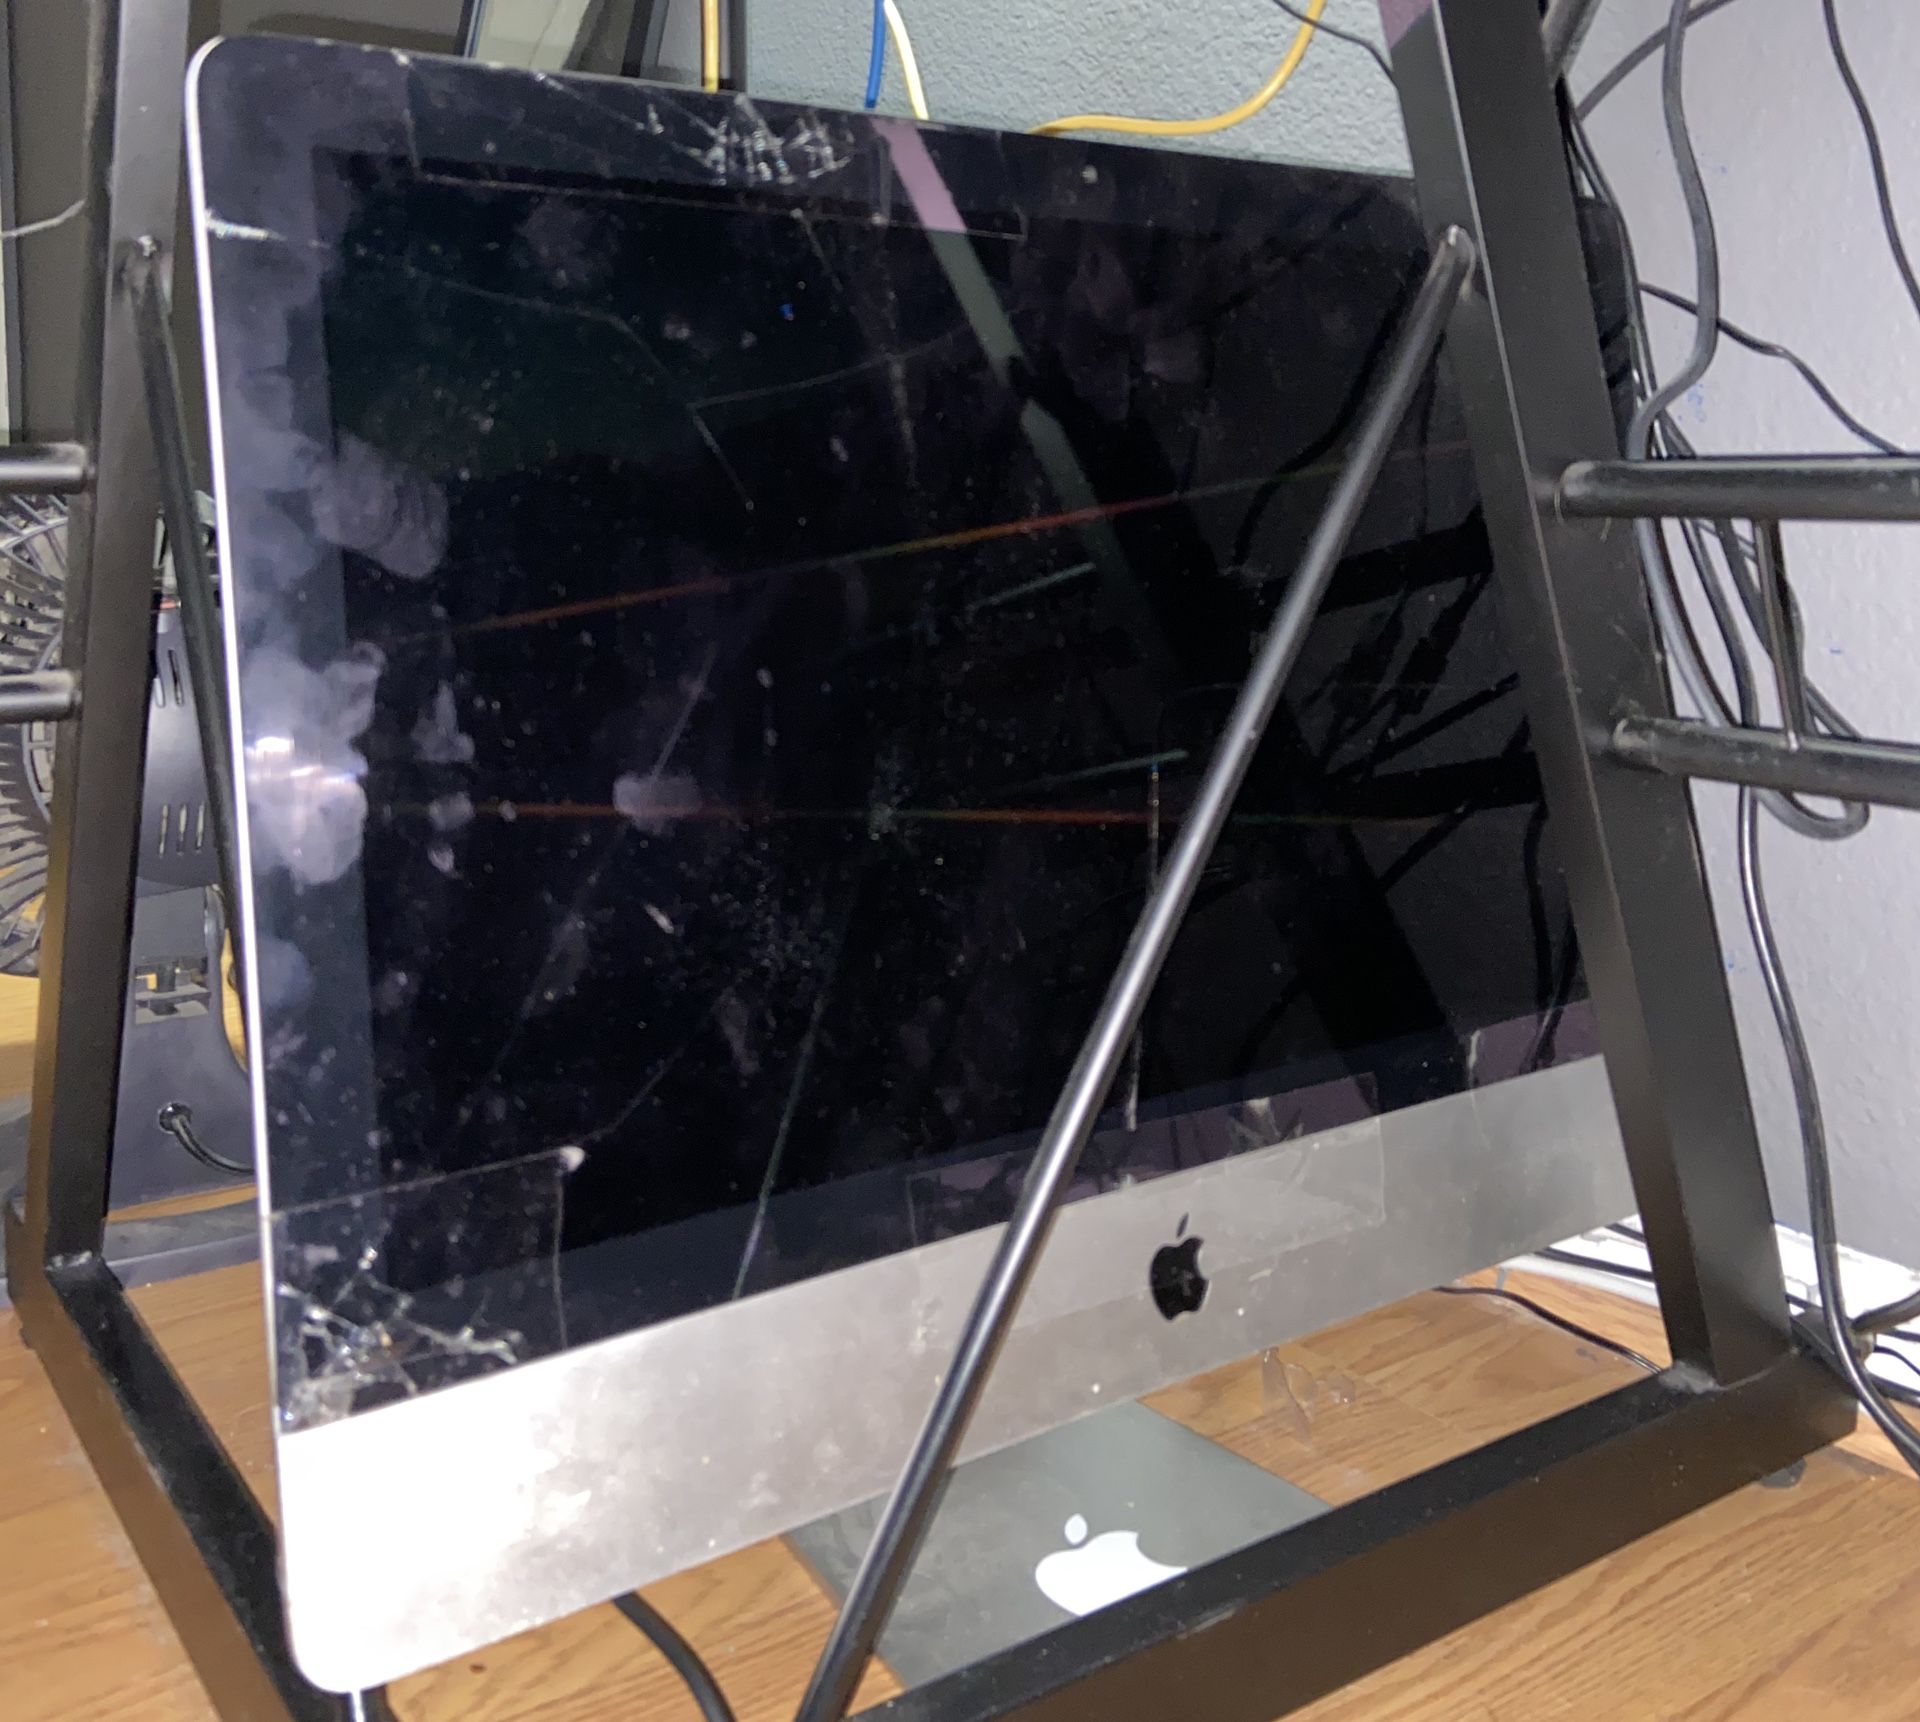 iMac Late 2012 (broken screen; see post)